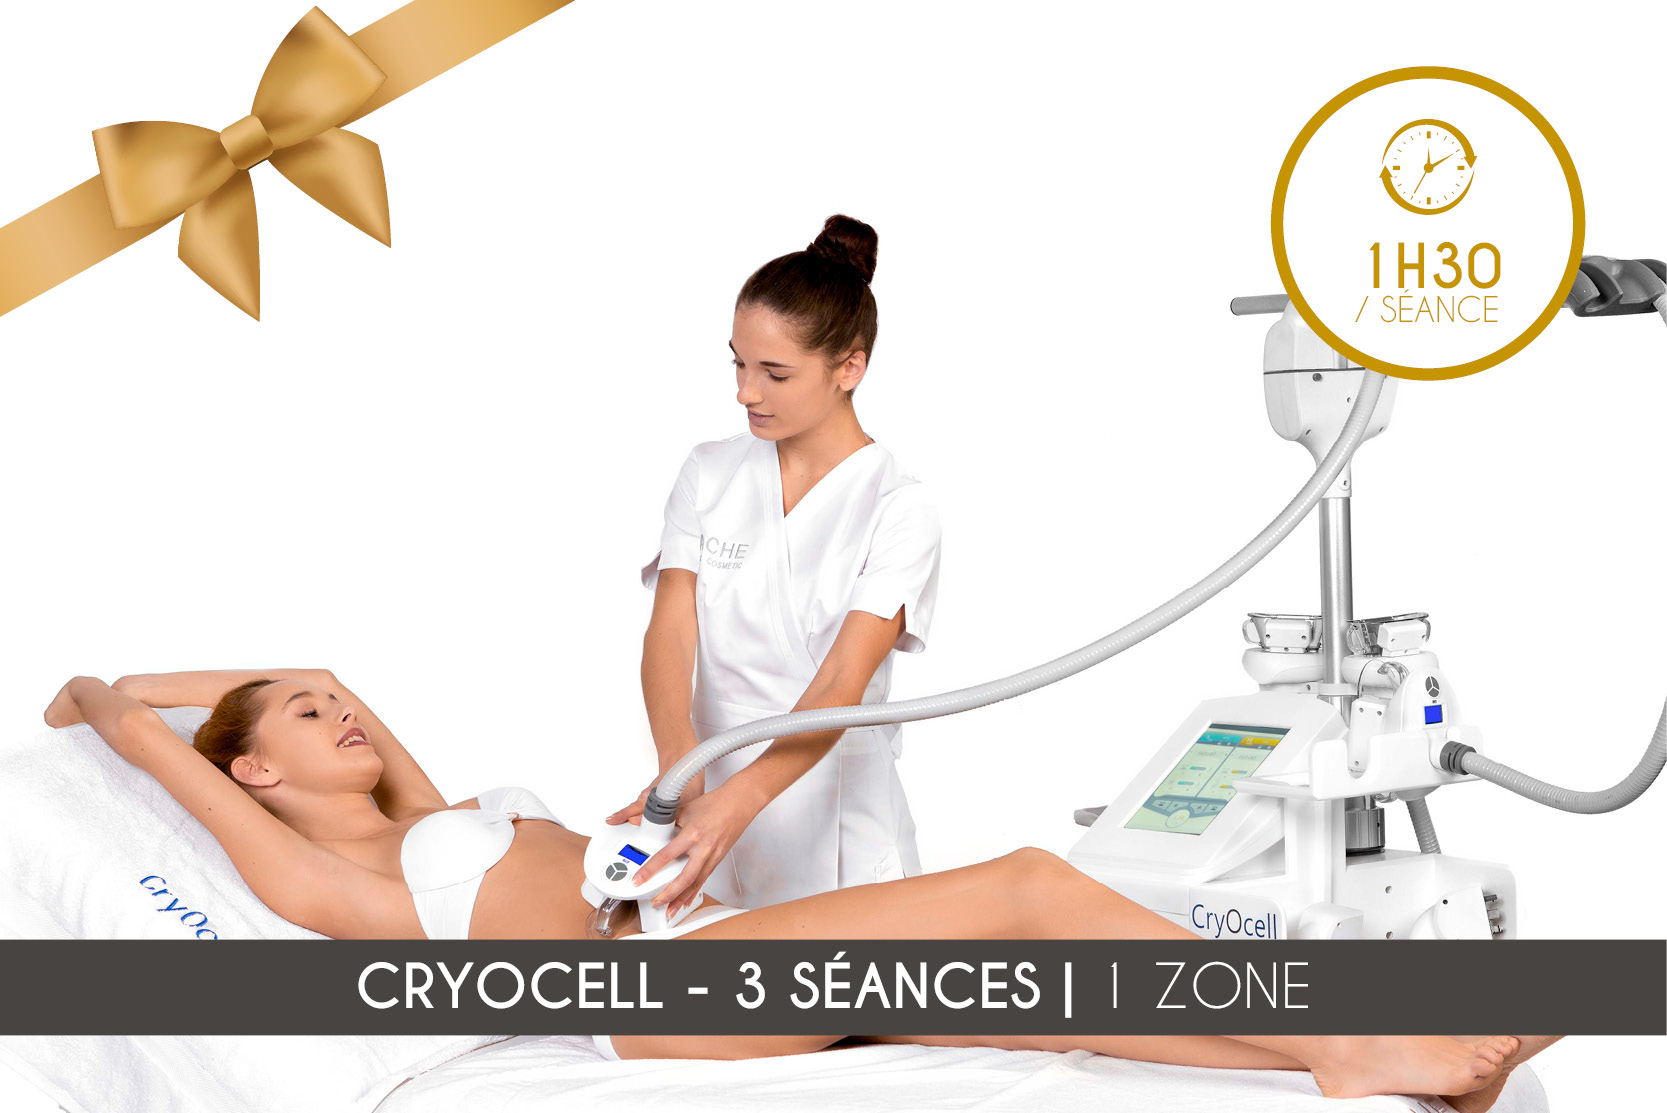 Cryocell - 3 séance (1 zone)